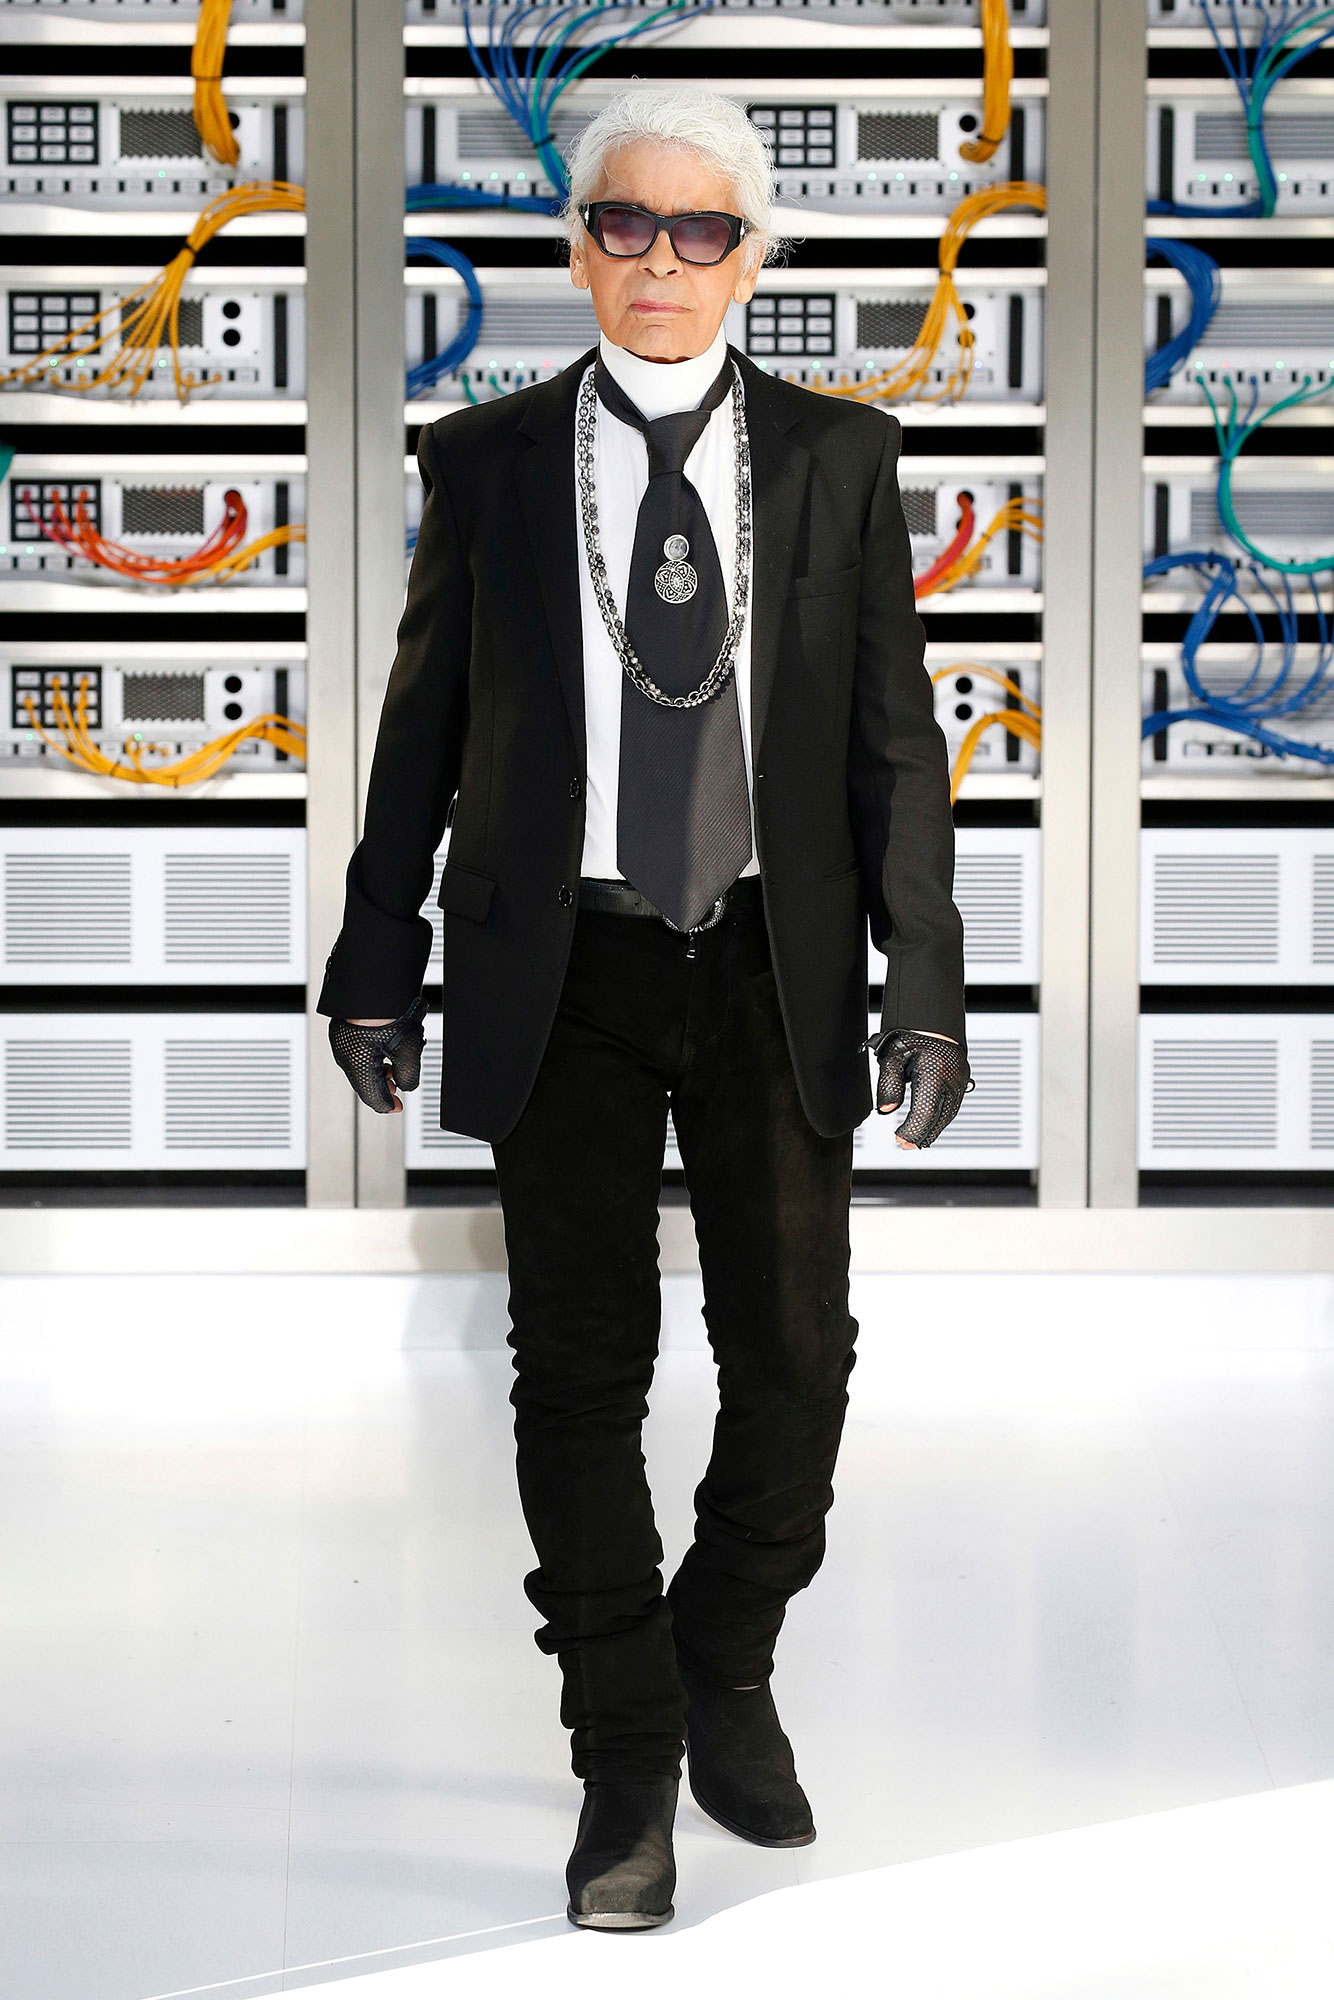 Met Gala 2023 Dress Code Explained: 'Karl Lagerfeld A Line of